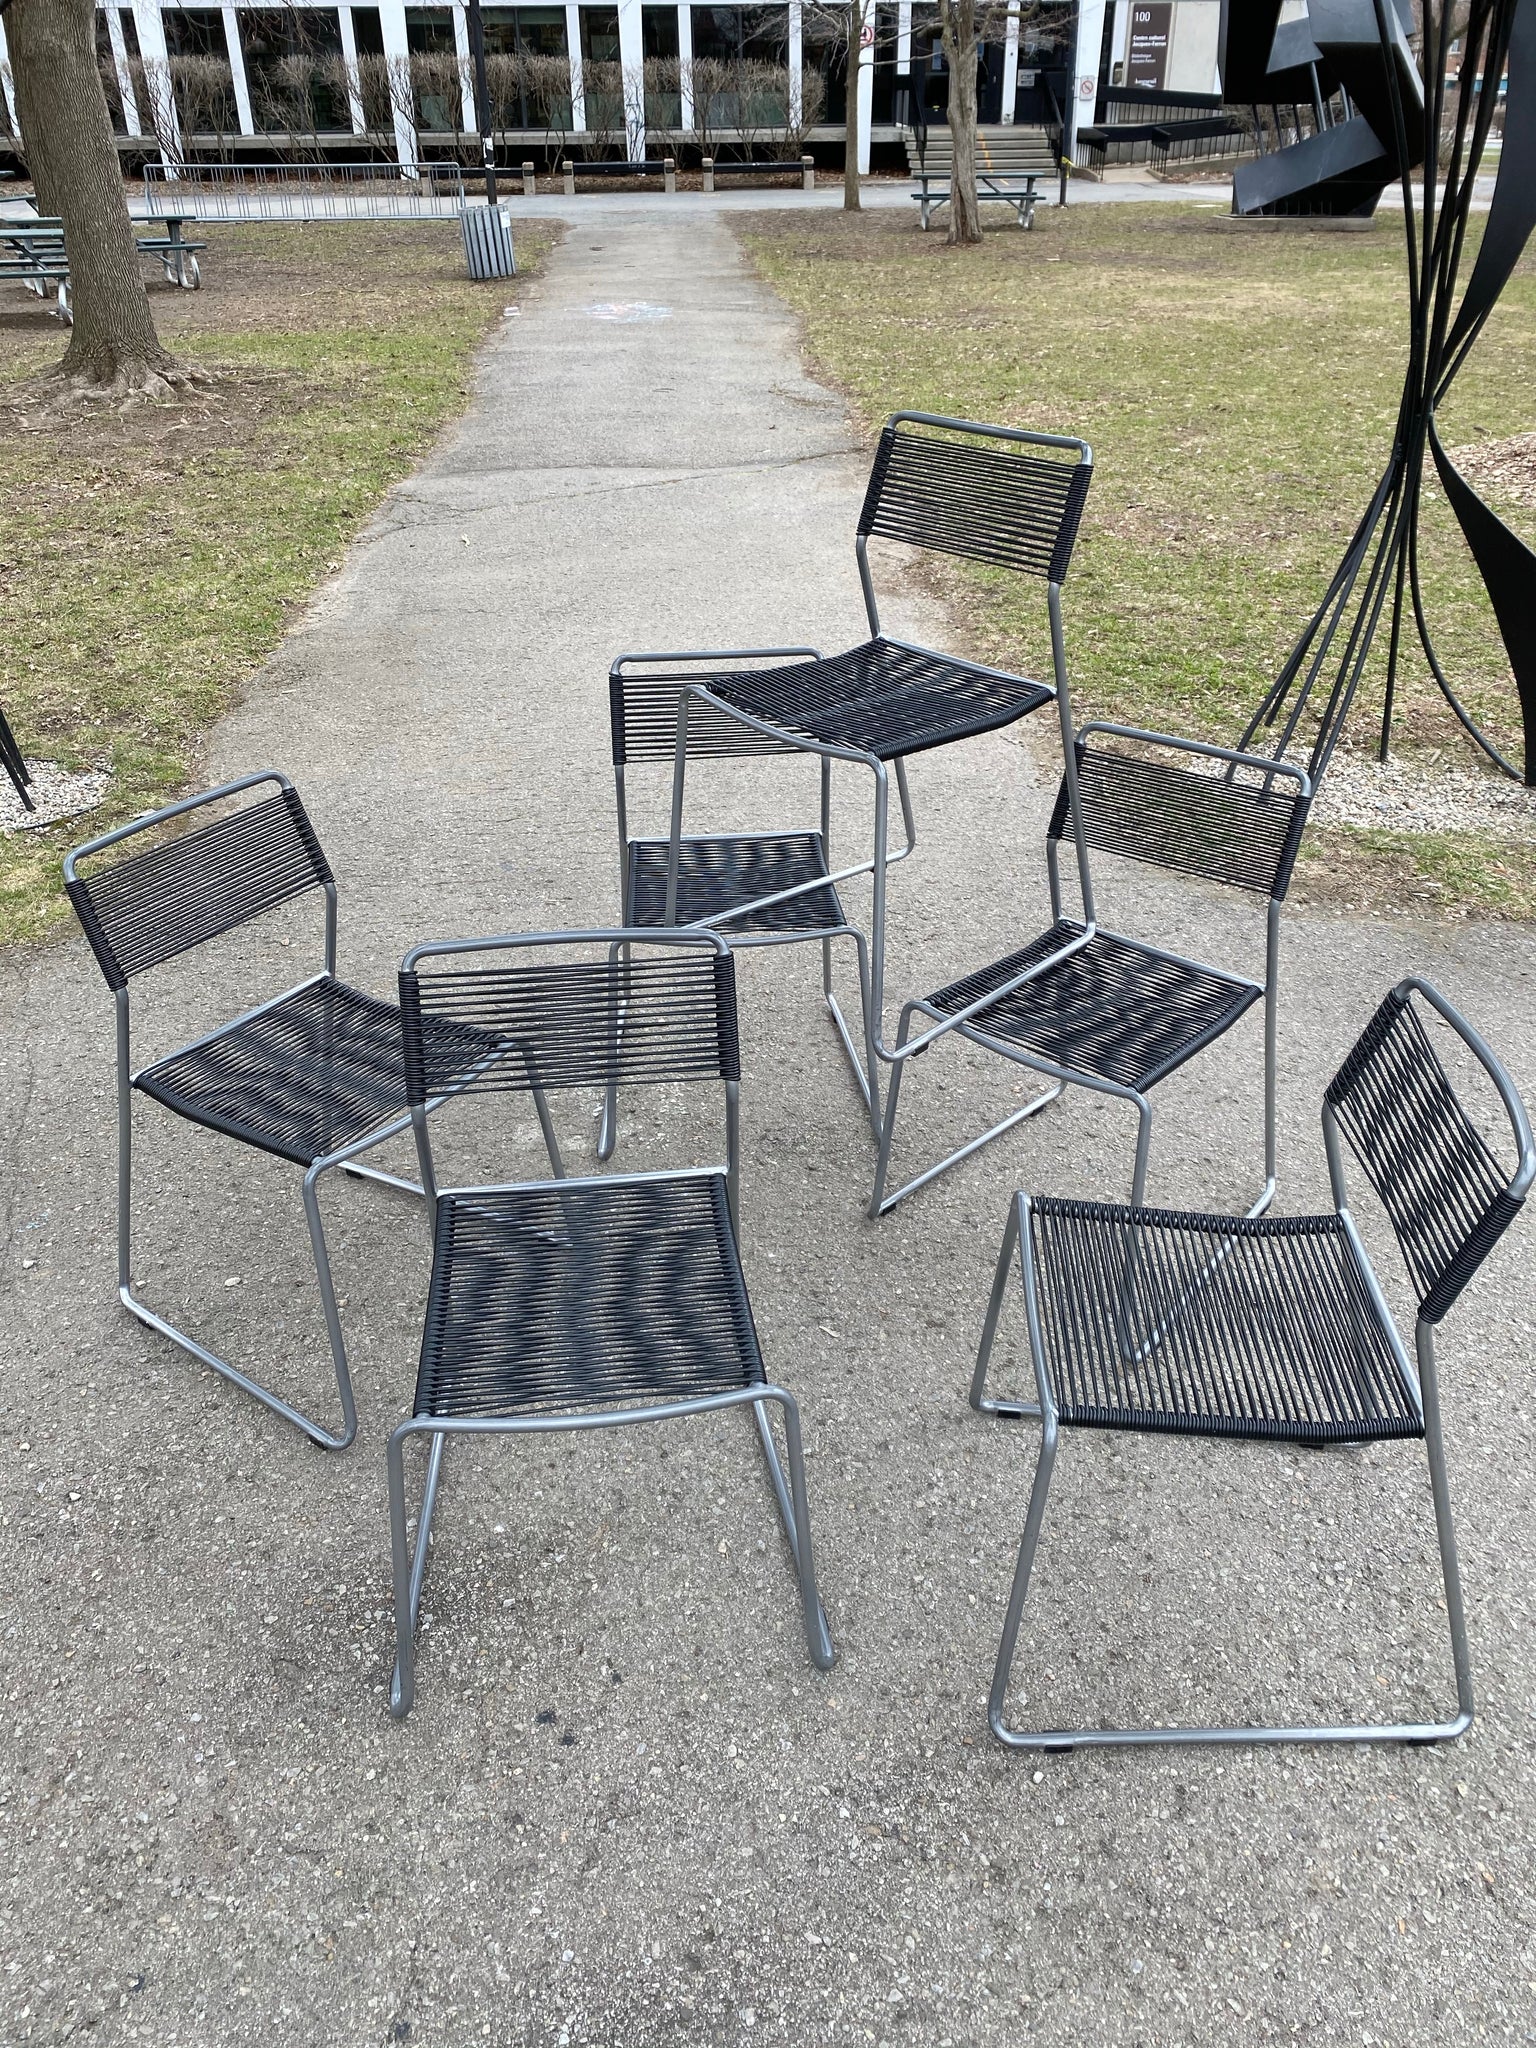 Spaghetti style IKEA MELKER chairs